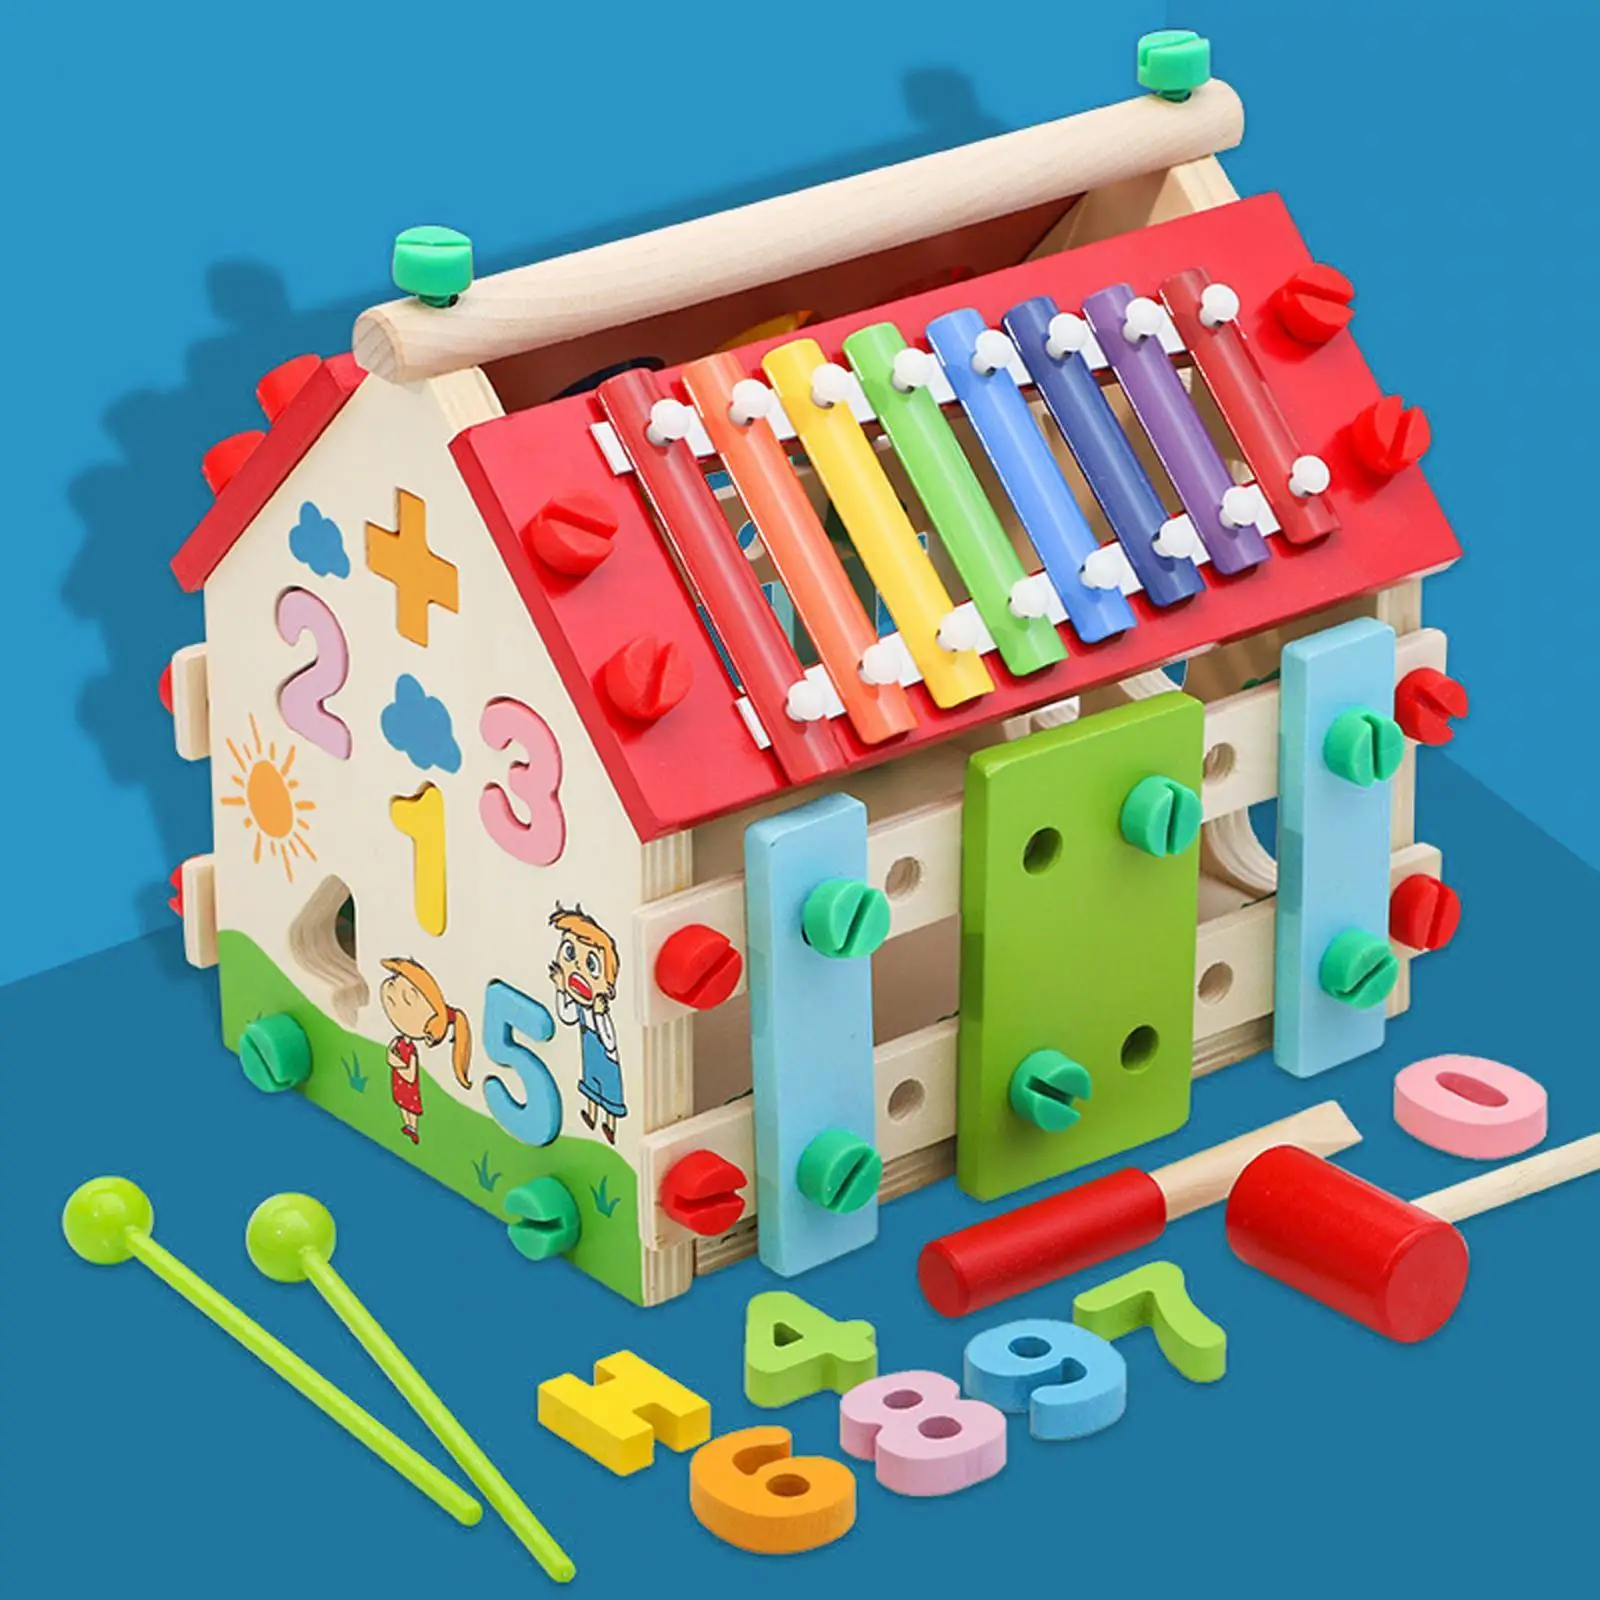 Wooden Activity Cube Multifunction Fine Motor Skills Sensory Toy Early Development Montessori for Boys Girls Kids Birthday Gift